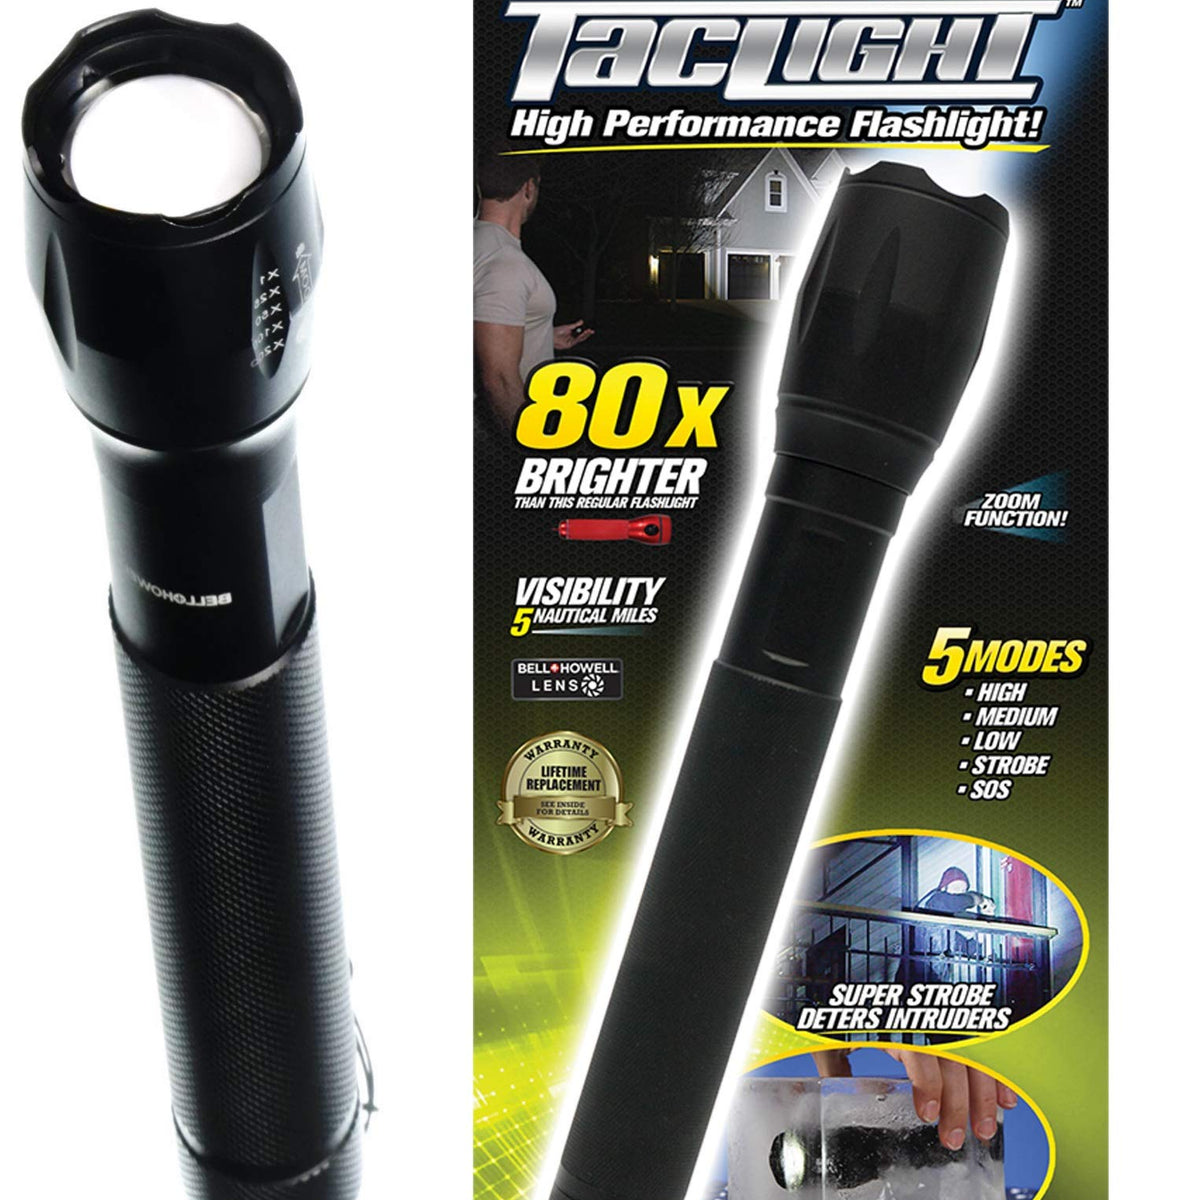 Bell + Howell Taclight High Performance Ultra Bright Flashlight